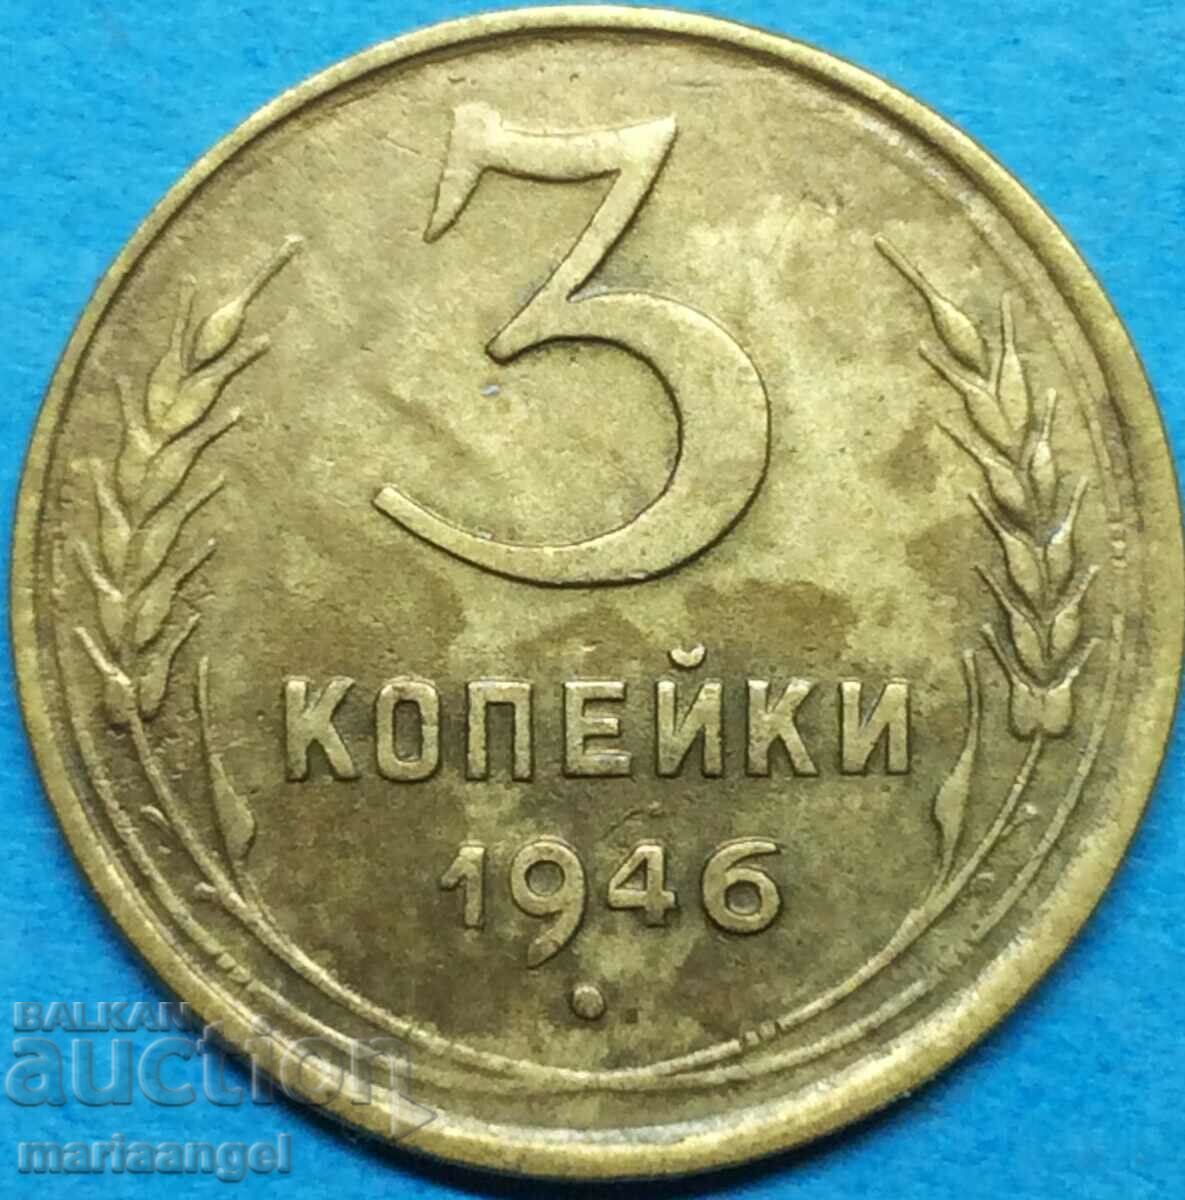 3 kopecks 1946 Russia USSR